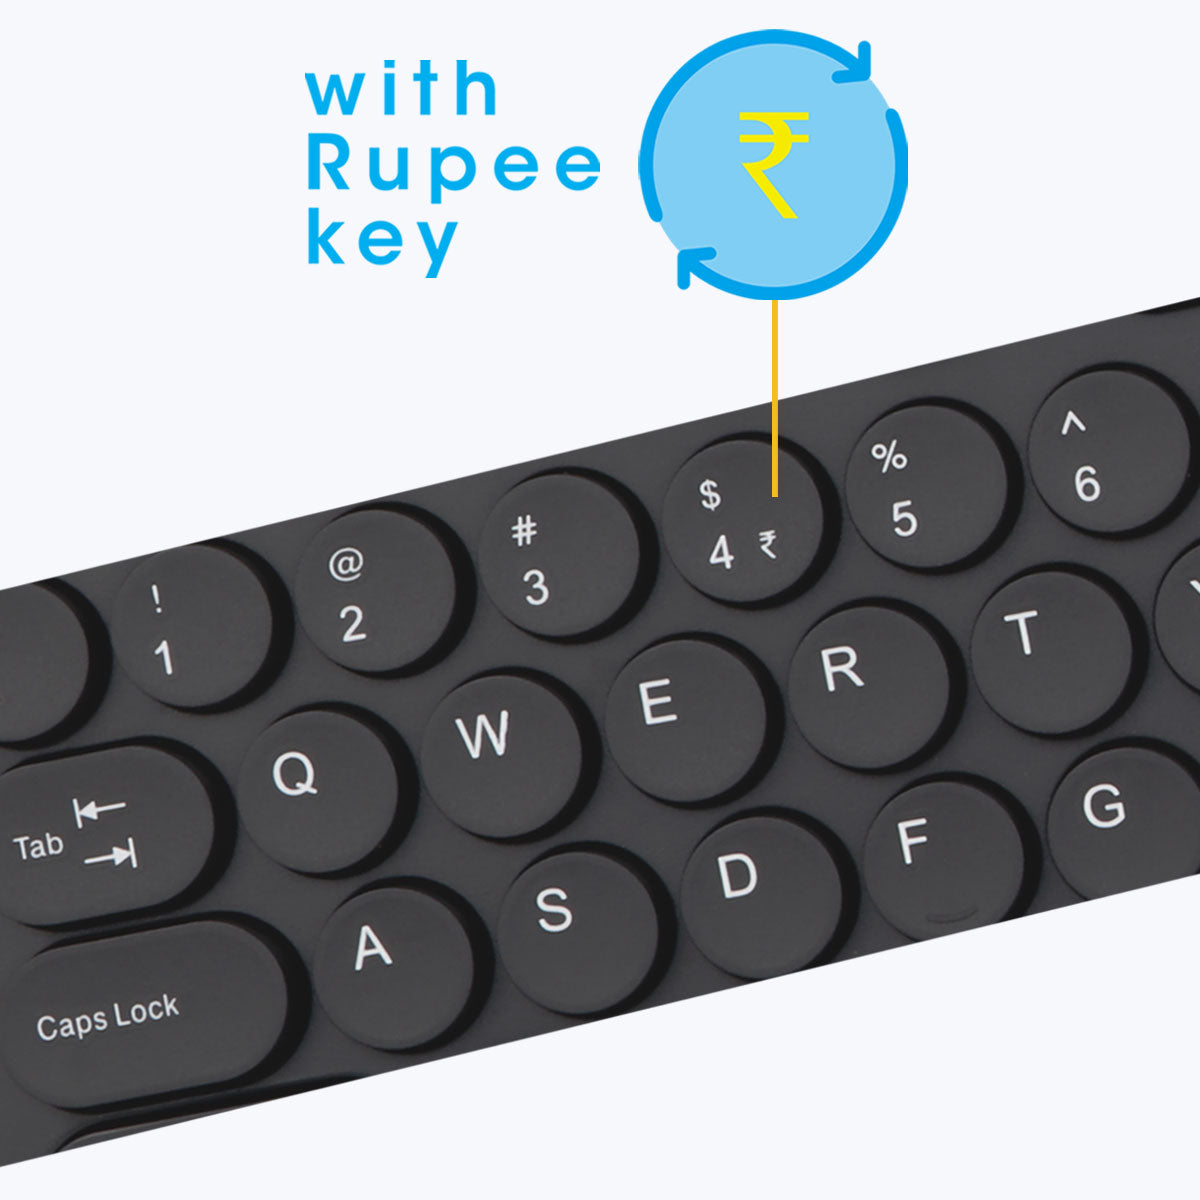 Zeb-K24 - Keyboard - Zebronics